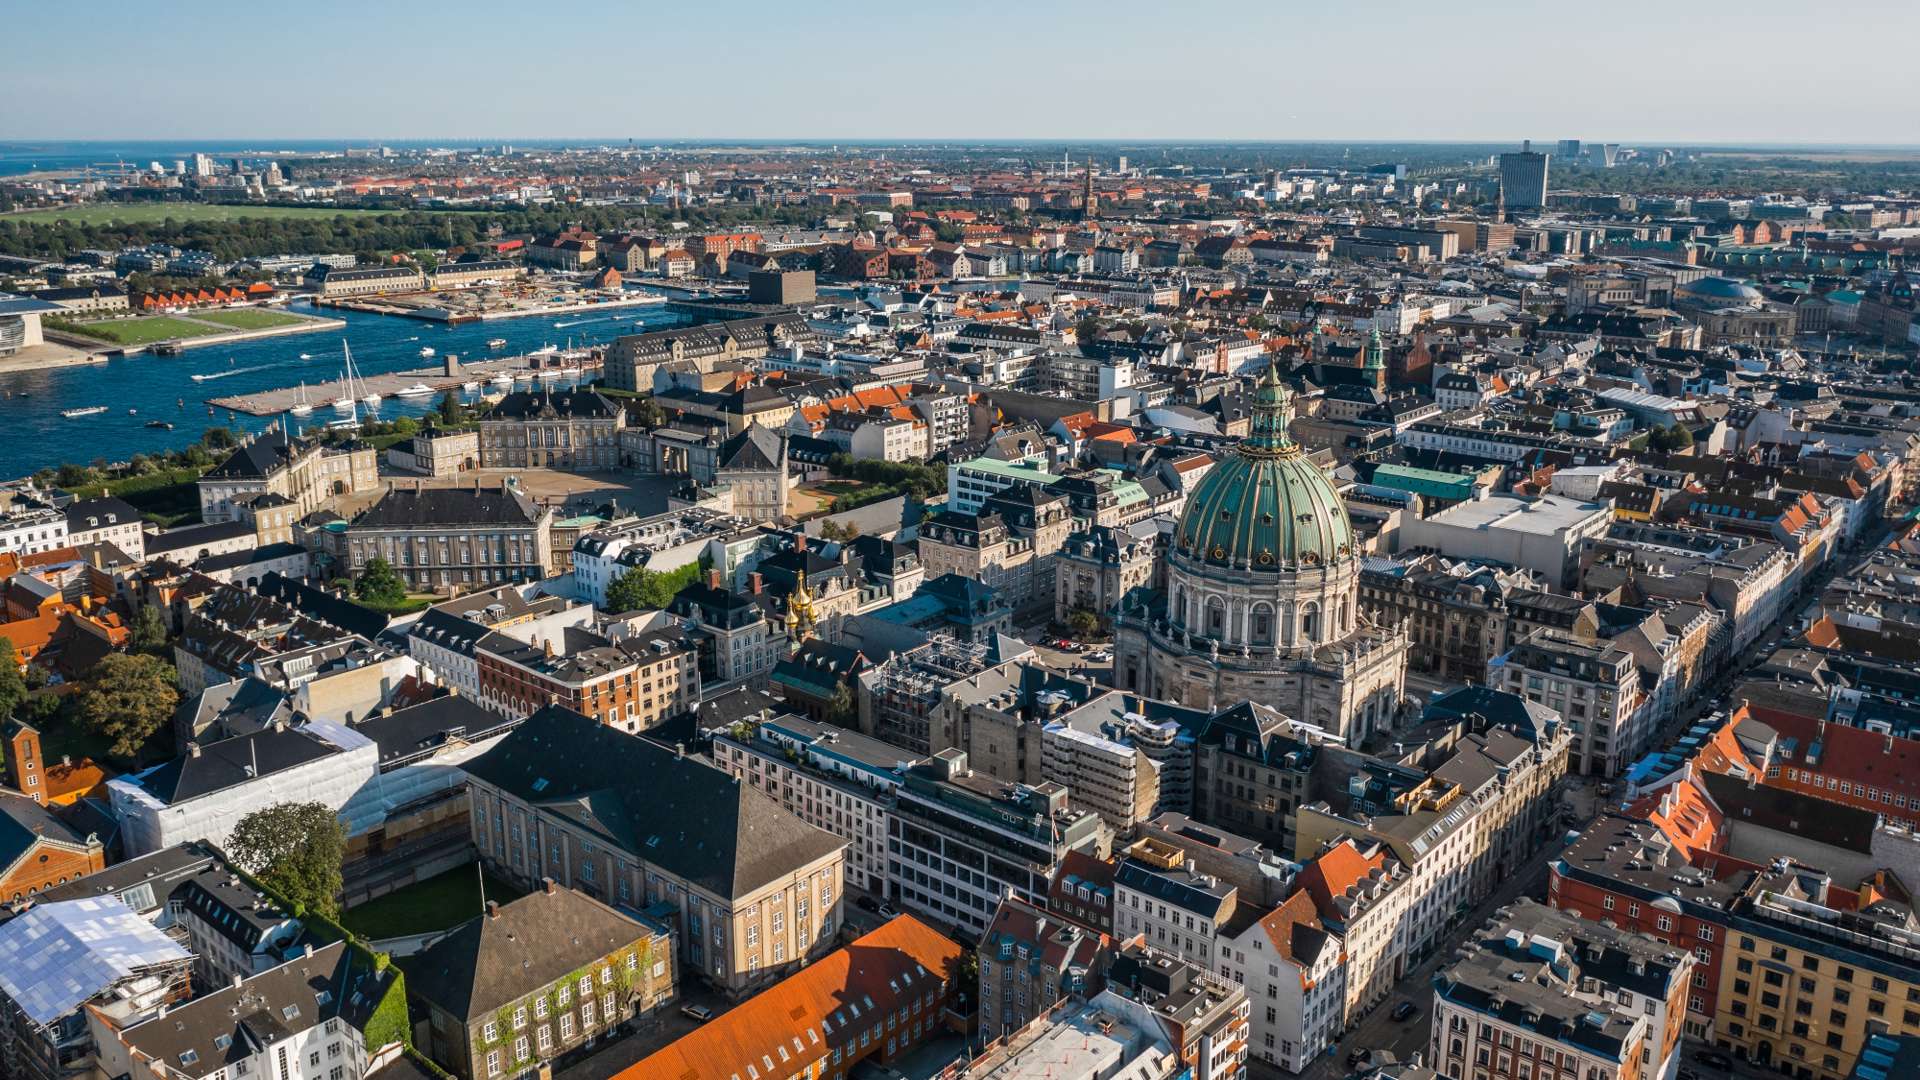 Cityscape Of Copenhagen 2021 10 16 03 31 27 Utc